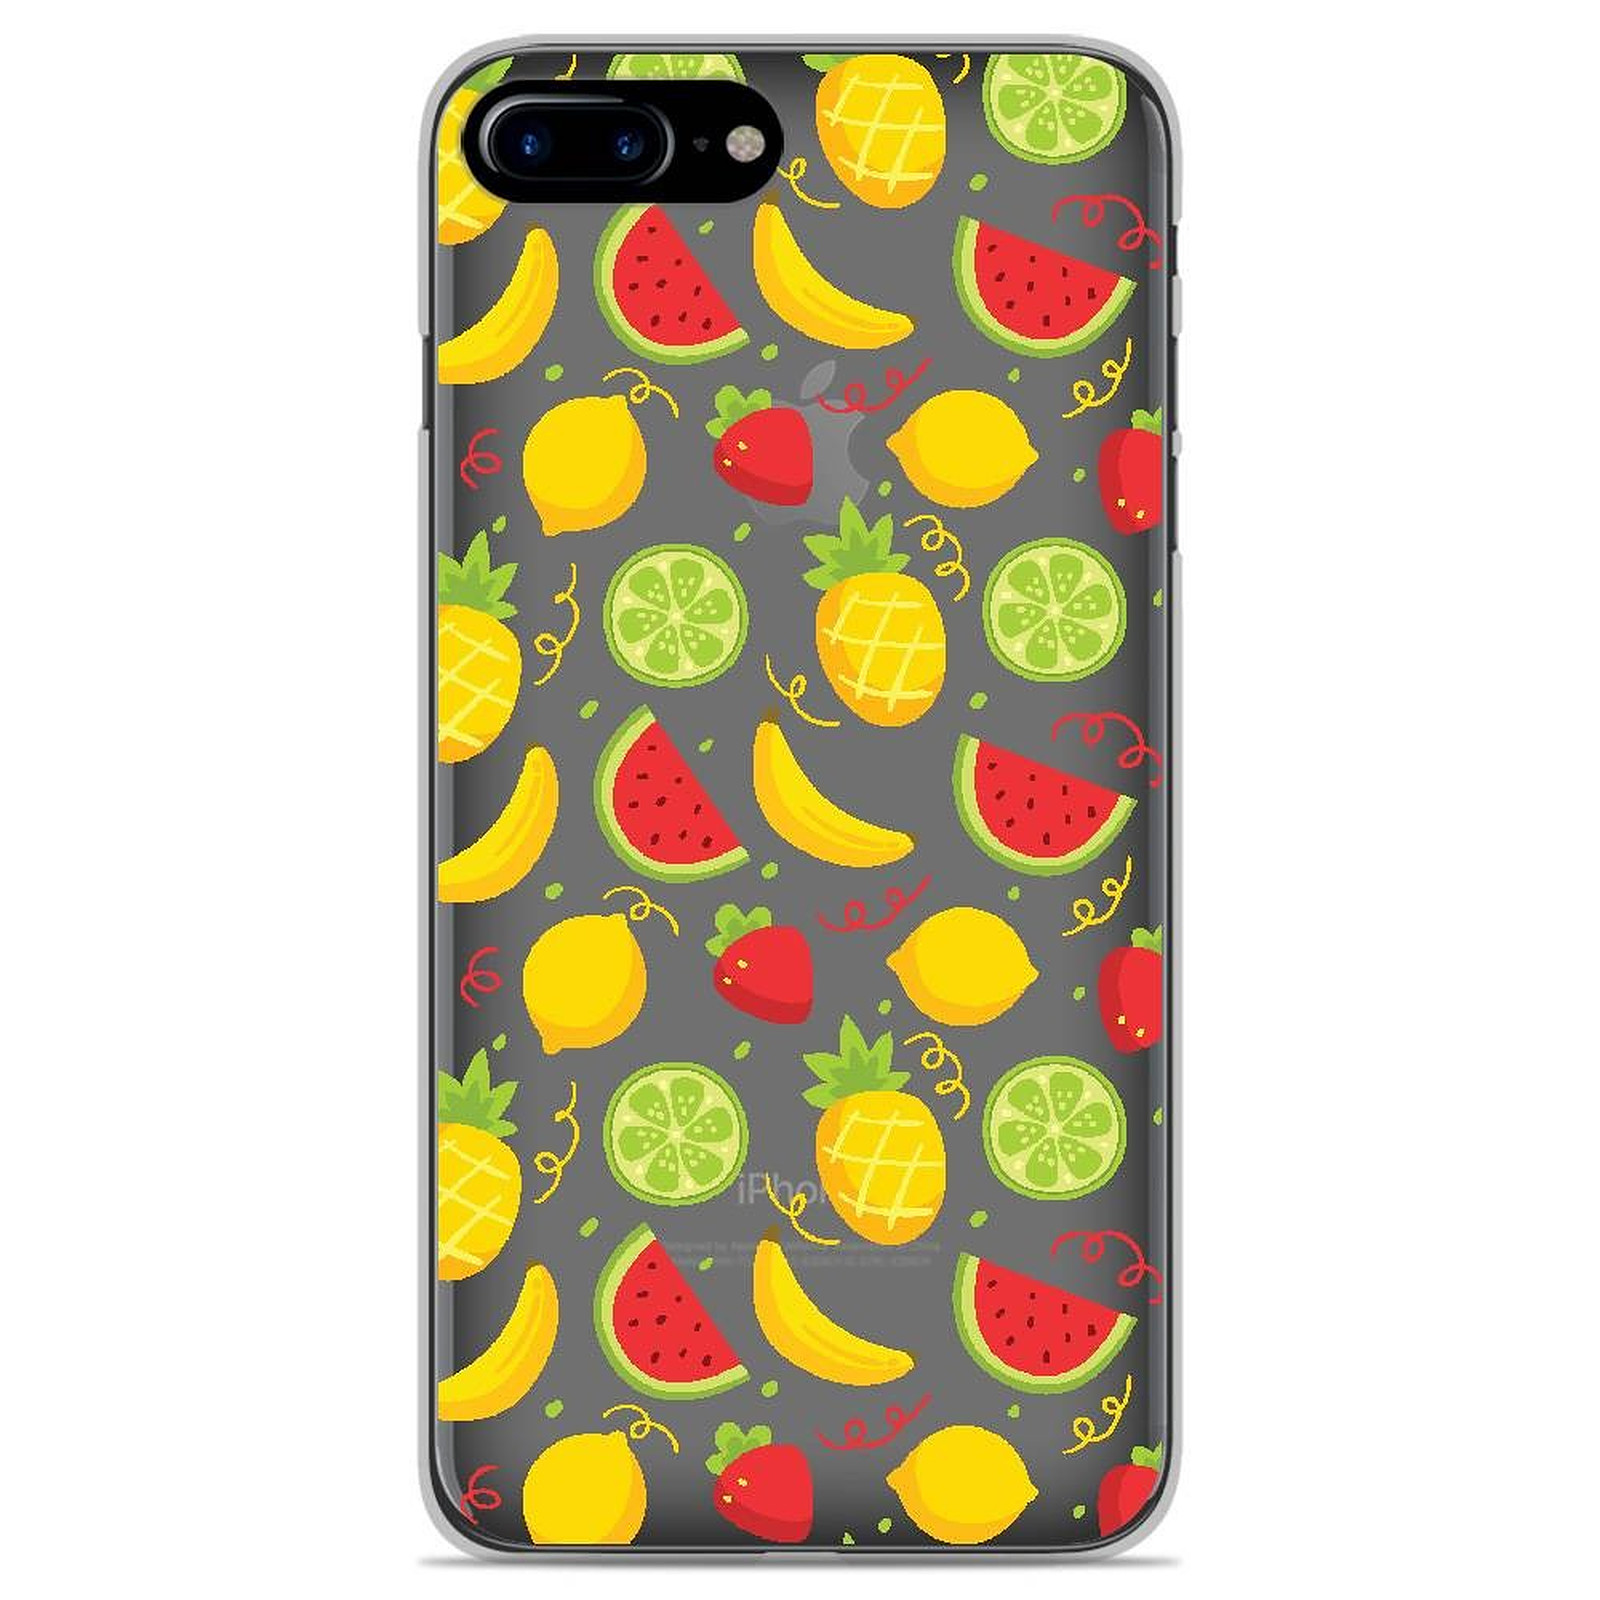 1001 Coques Coque silicone gel Apple iPhone 7 Plus motif Fruits tropicaux - Coque telephone 1001Coques